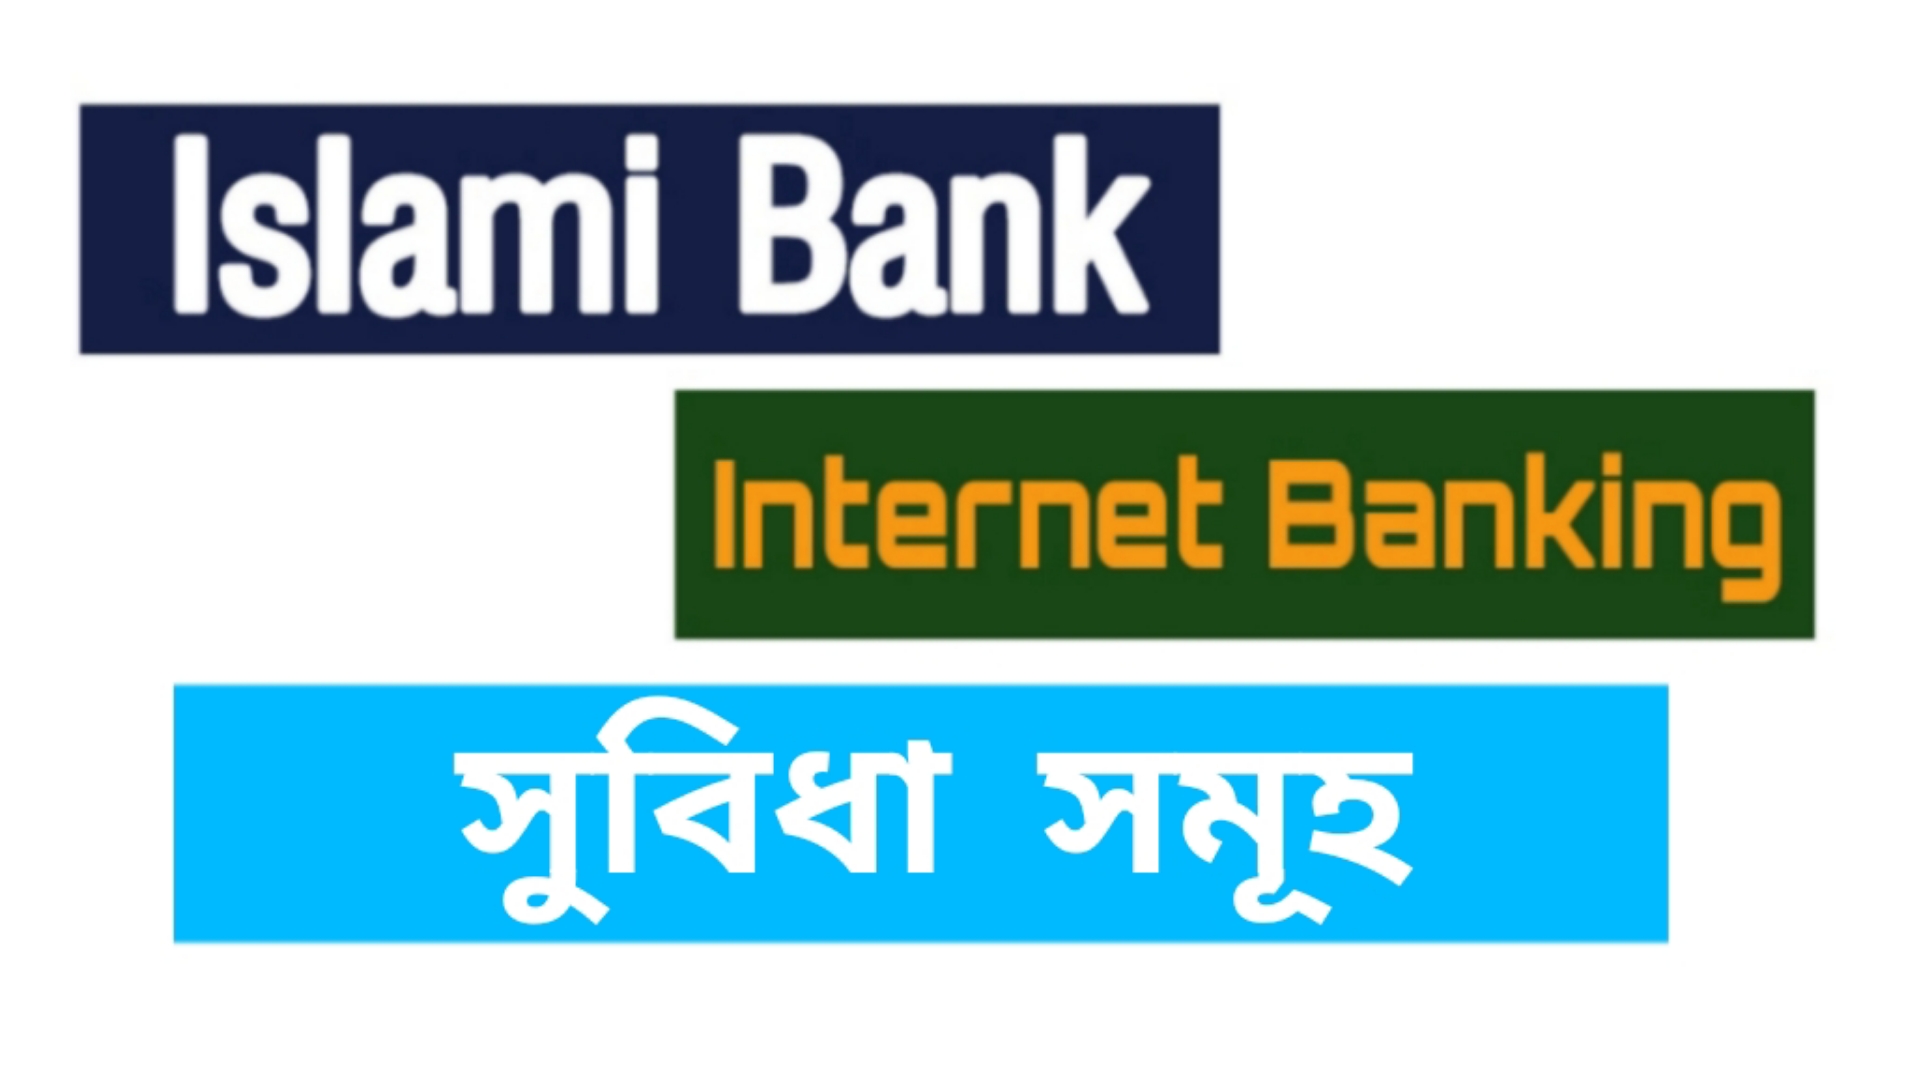 Islami bank internet banking 